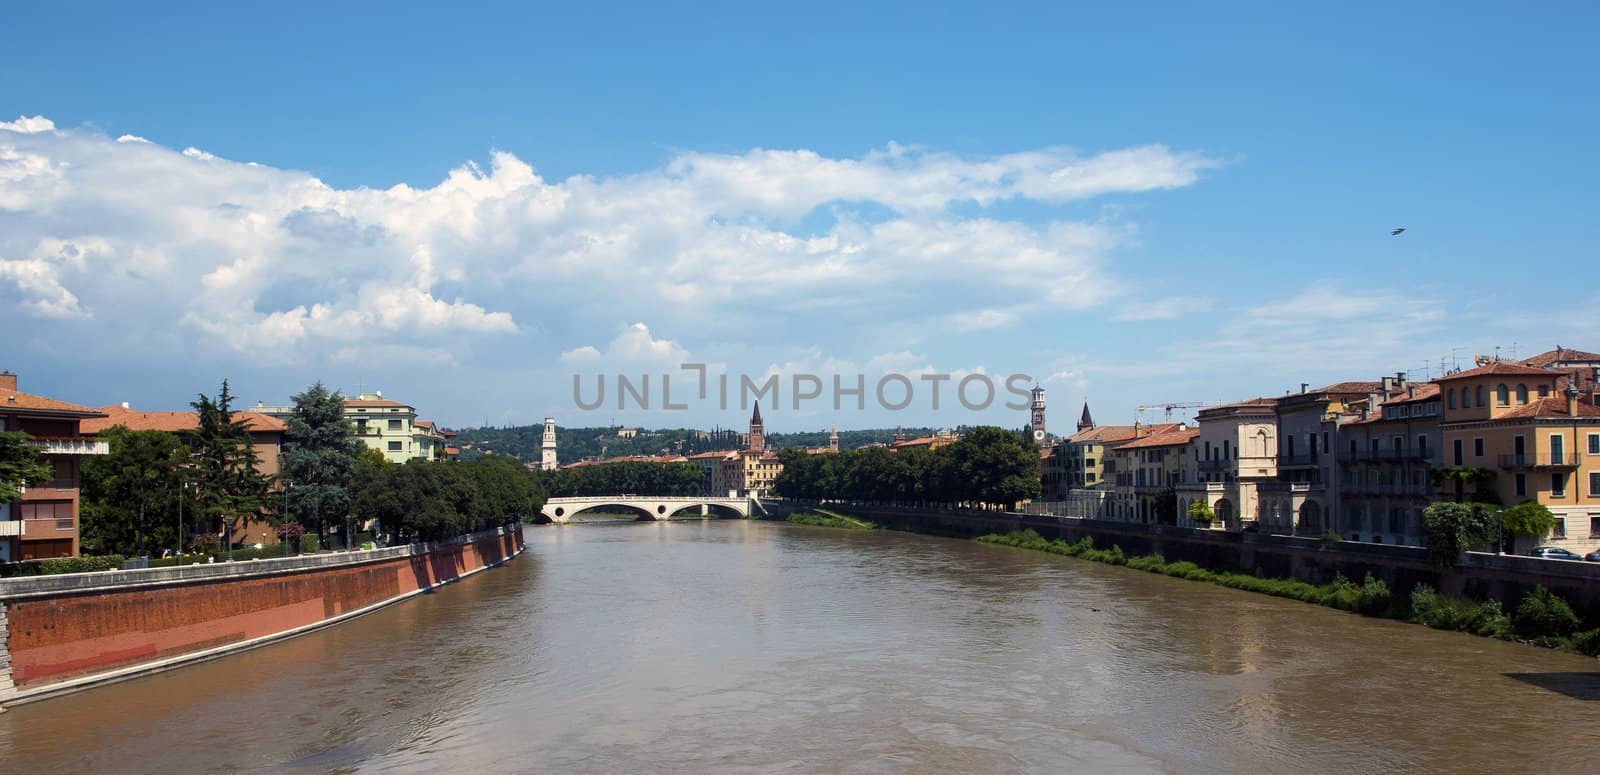 Verona panoramic view from the bridge, Italy